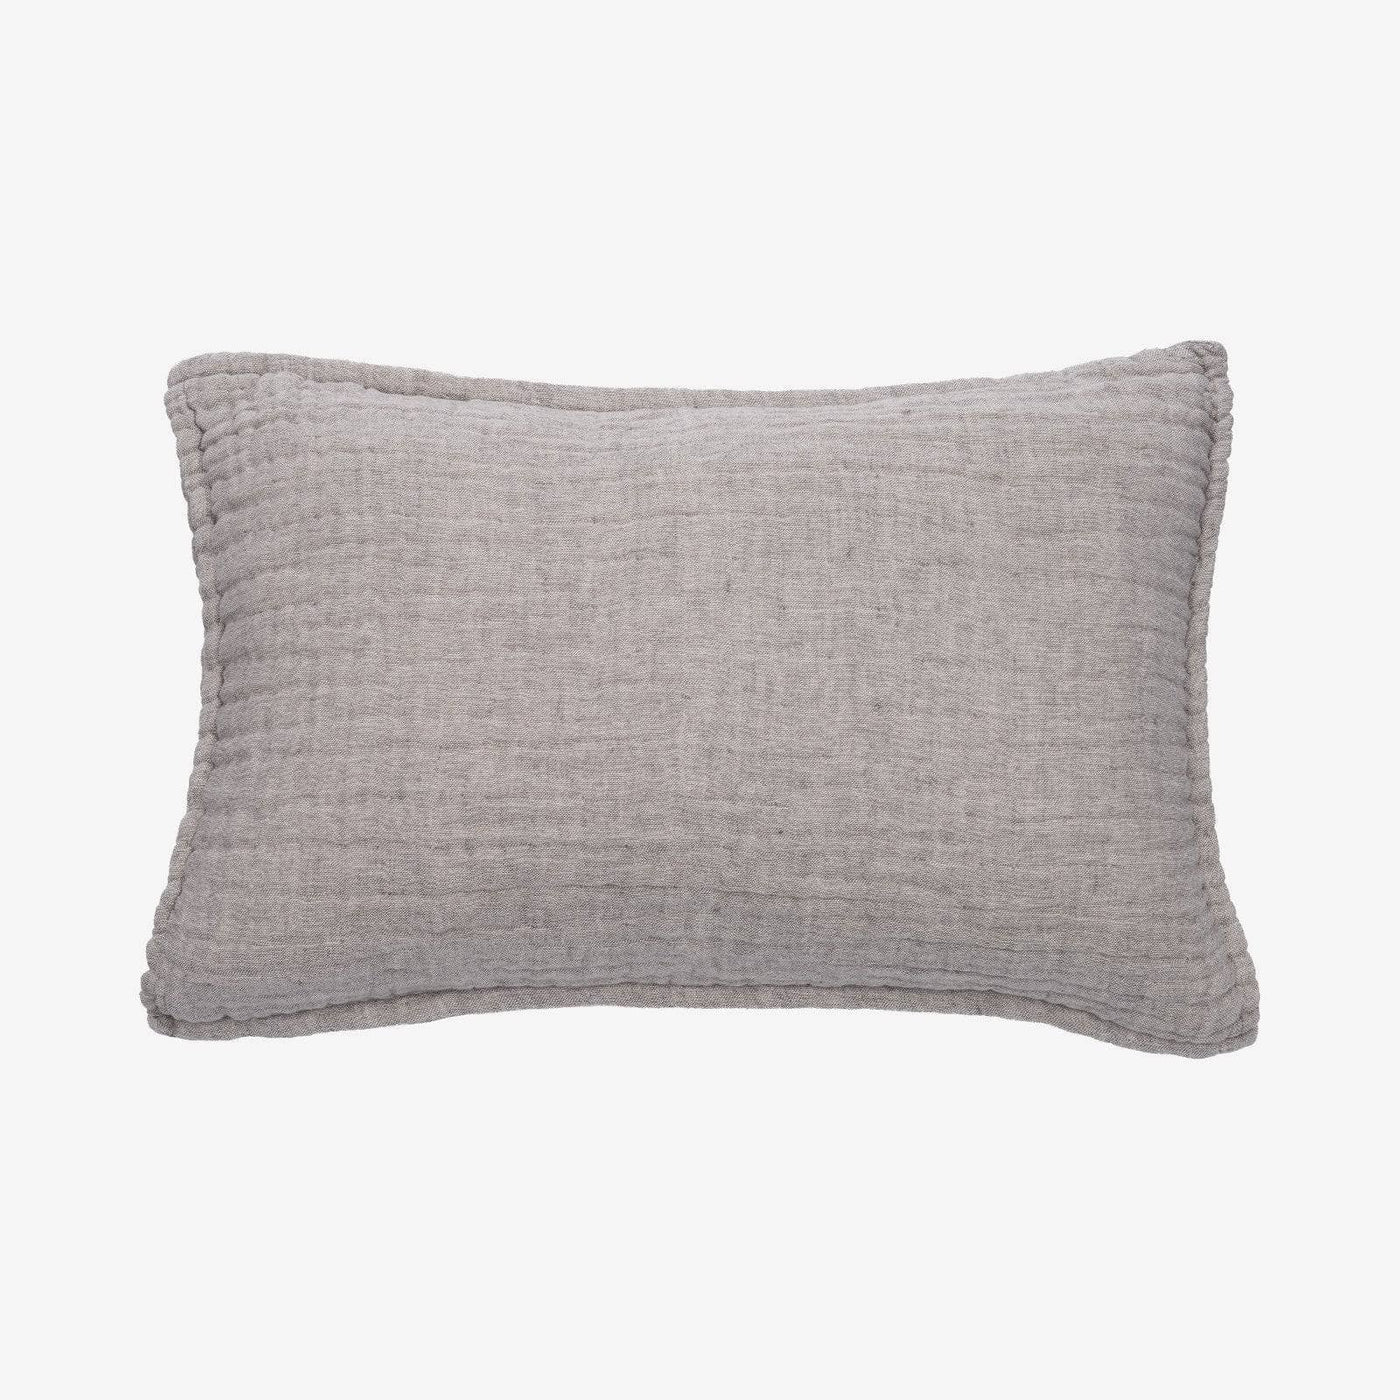 Hazel Set of 2 Cotton And Linen Pillowcases, Grey Blankets & Bedspreads sazy.com